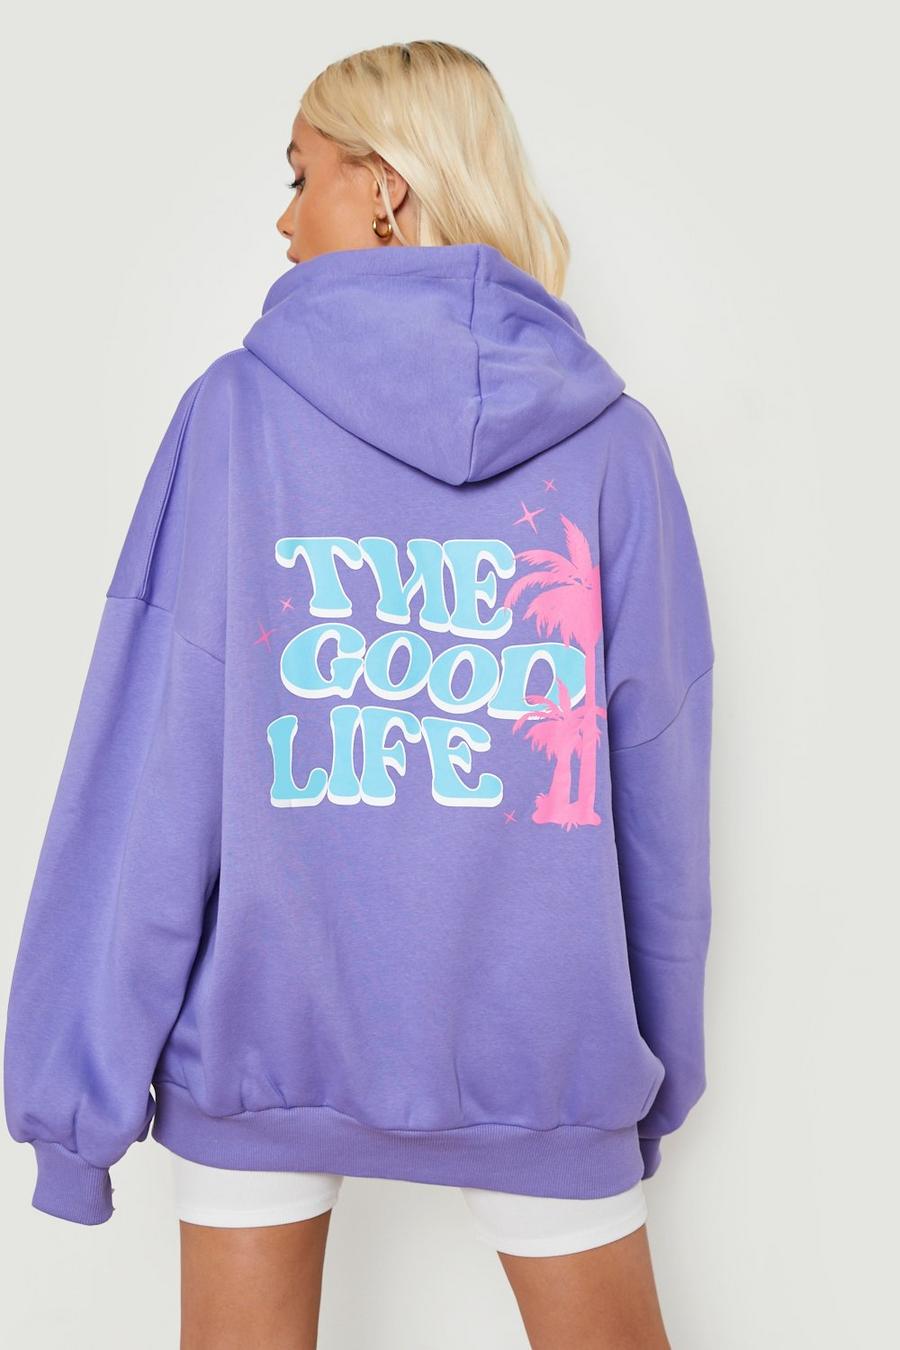 Oversize The Good Life Hoodie, Purple violet